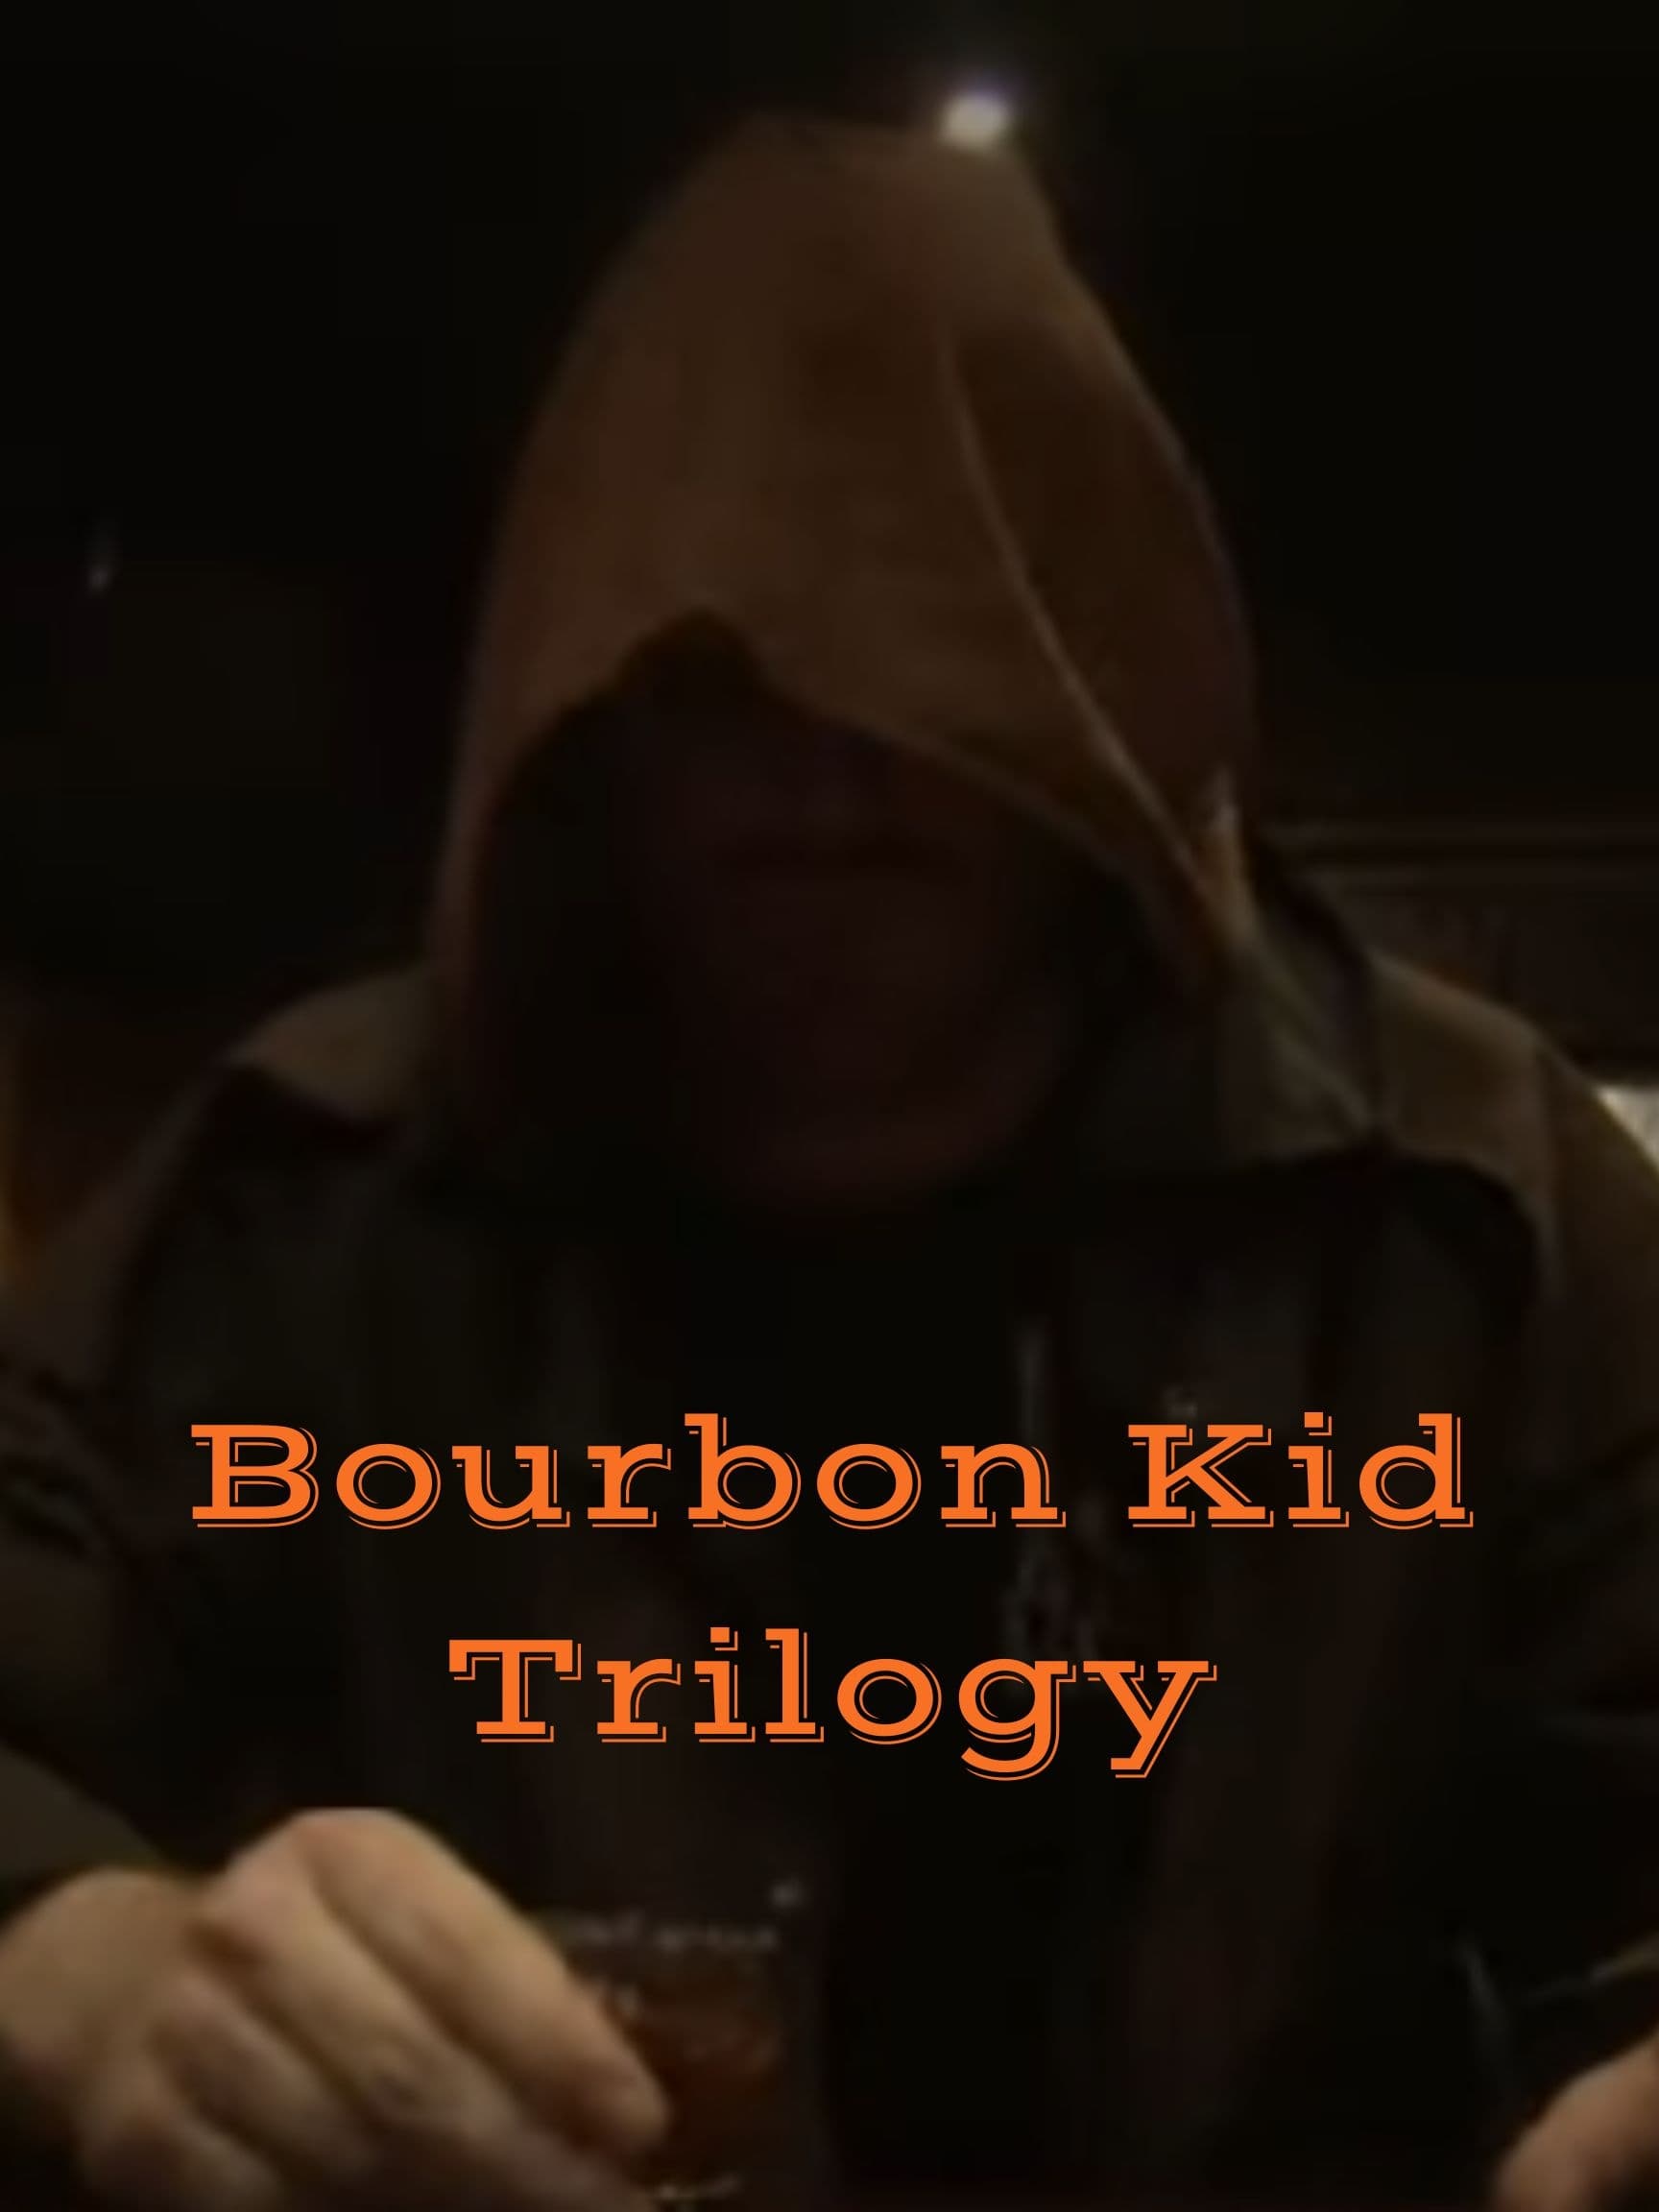 Bourbon Kid Trilogy Trailer